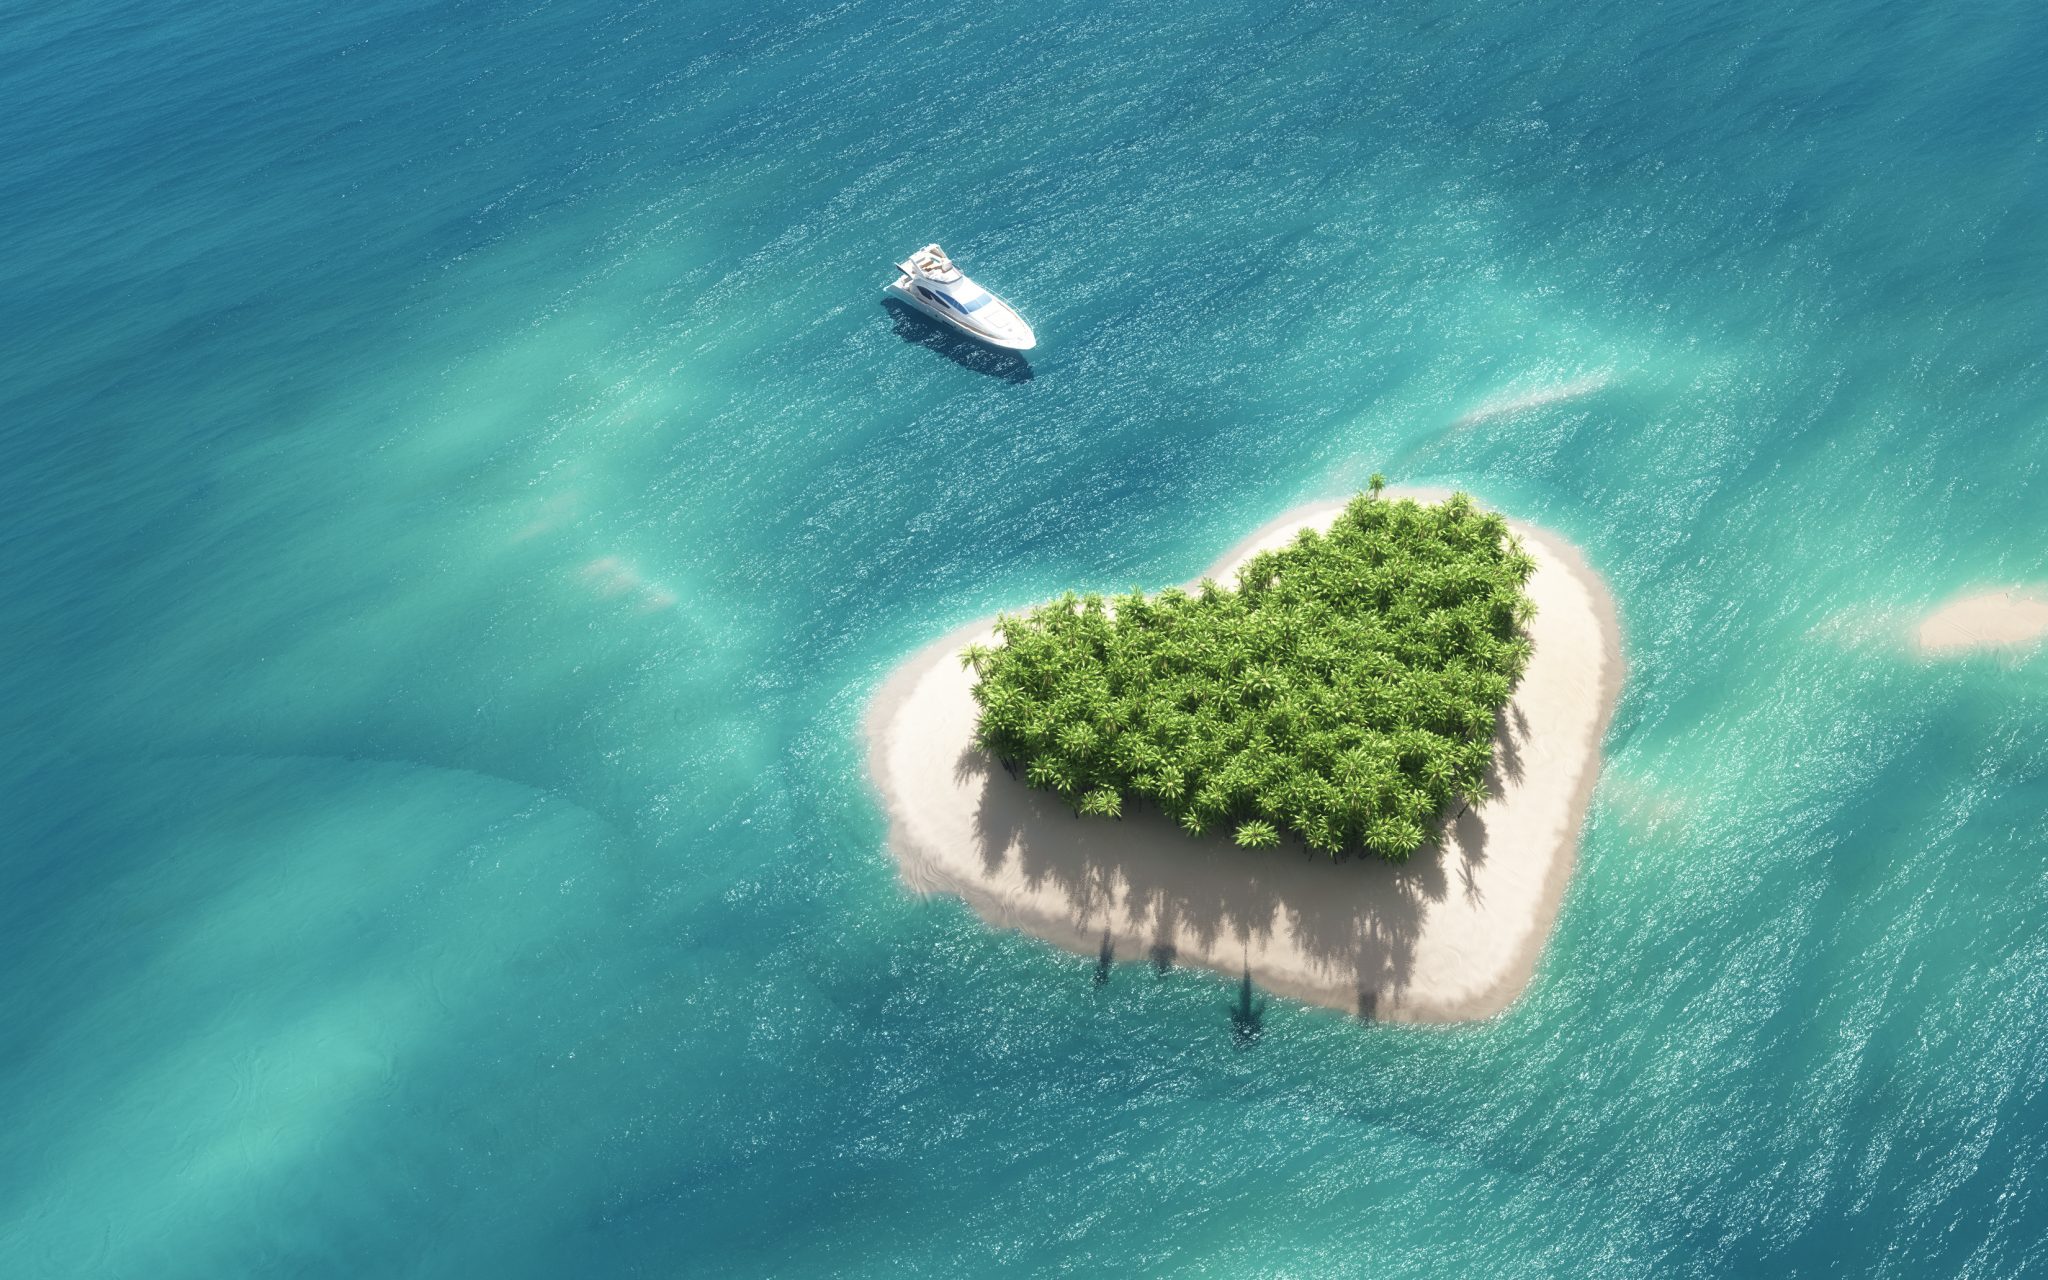 love travel island